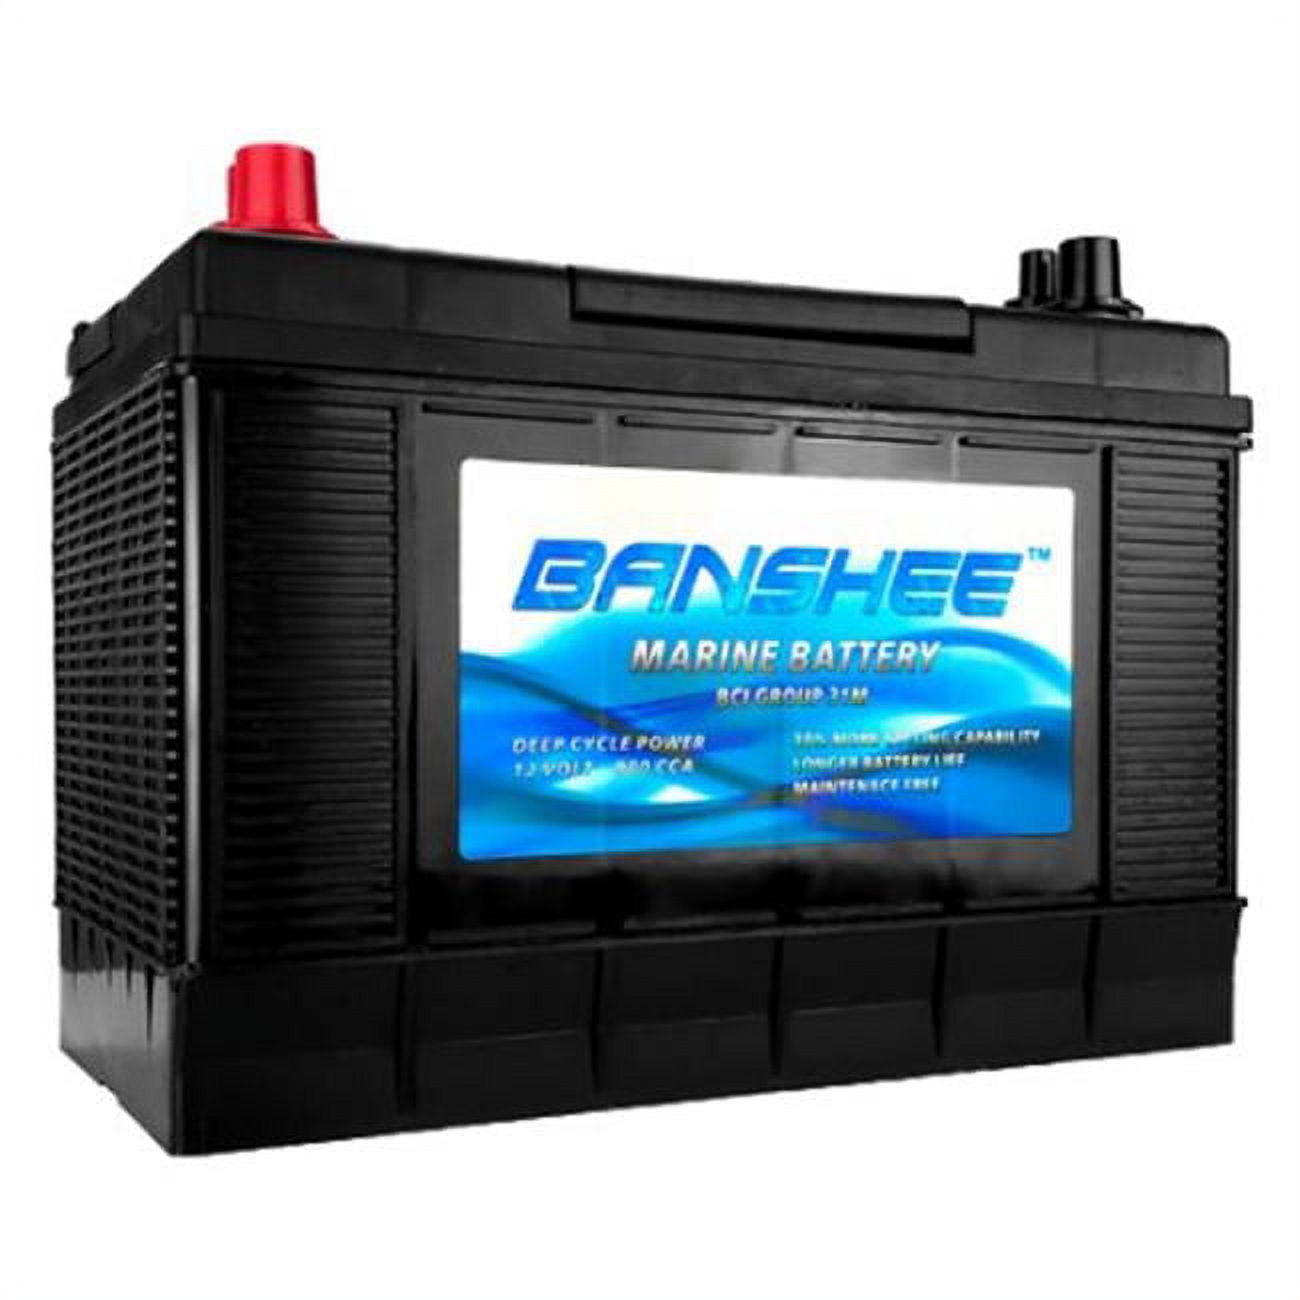 Picture of Banshee 31M-Banshee-2 SC31DM 8052-161 D31M Bluetop Starting & Deep Cycle Battery